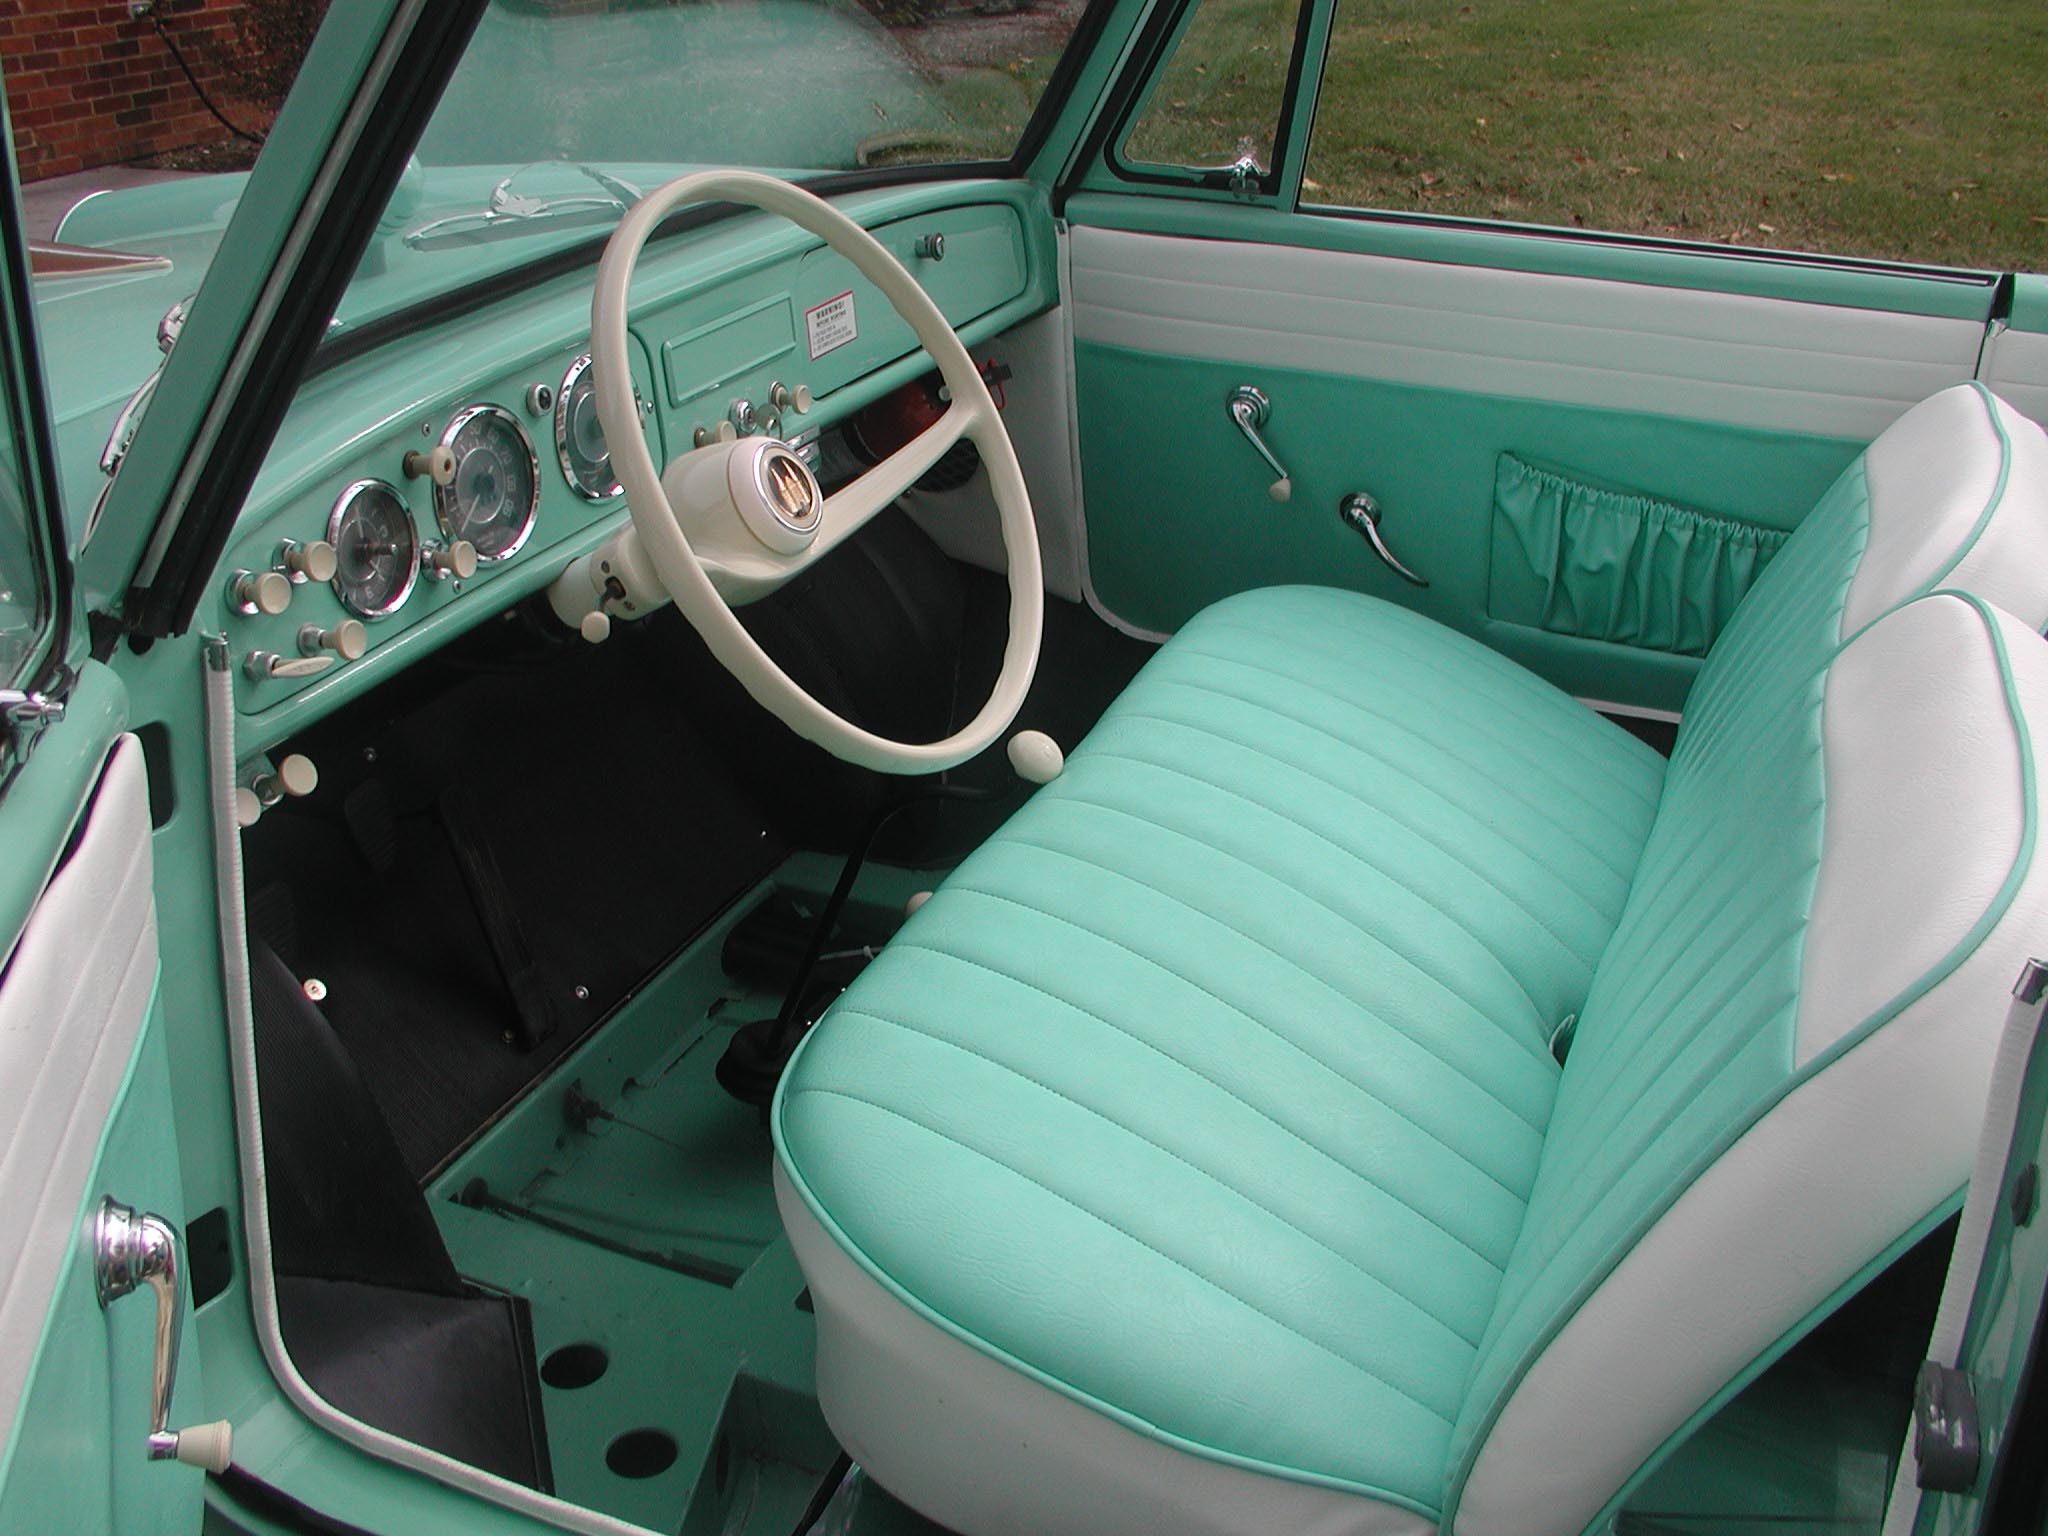 1967 amphicar model 770